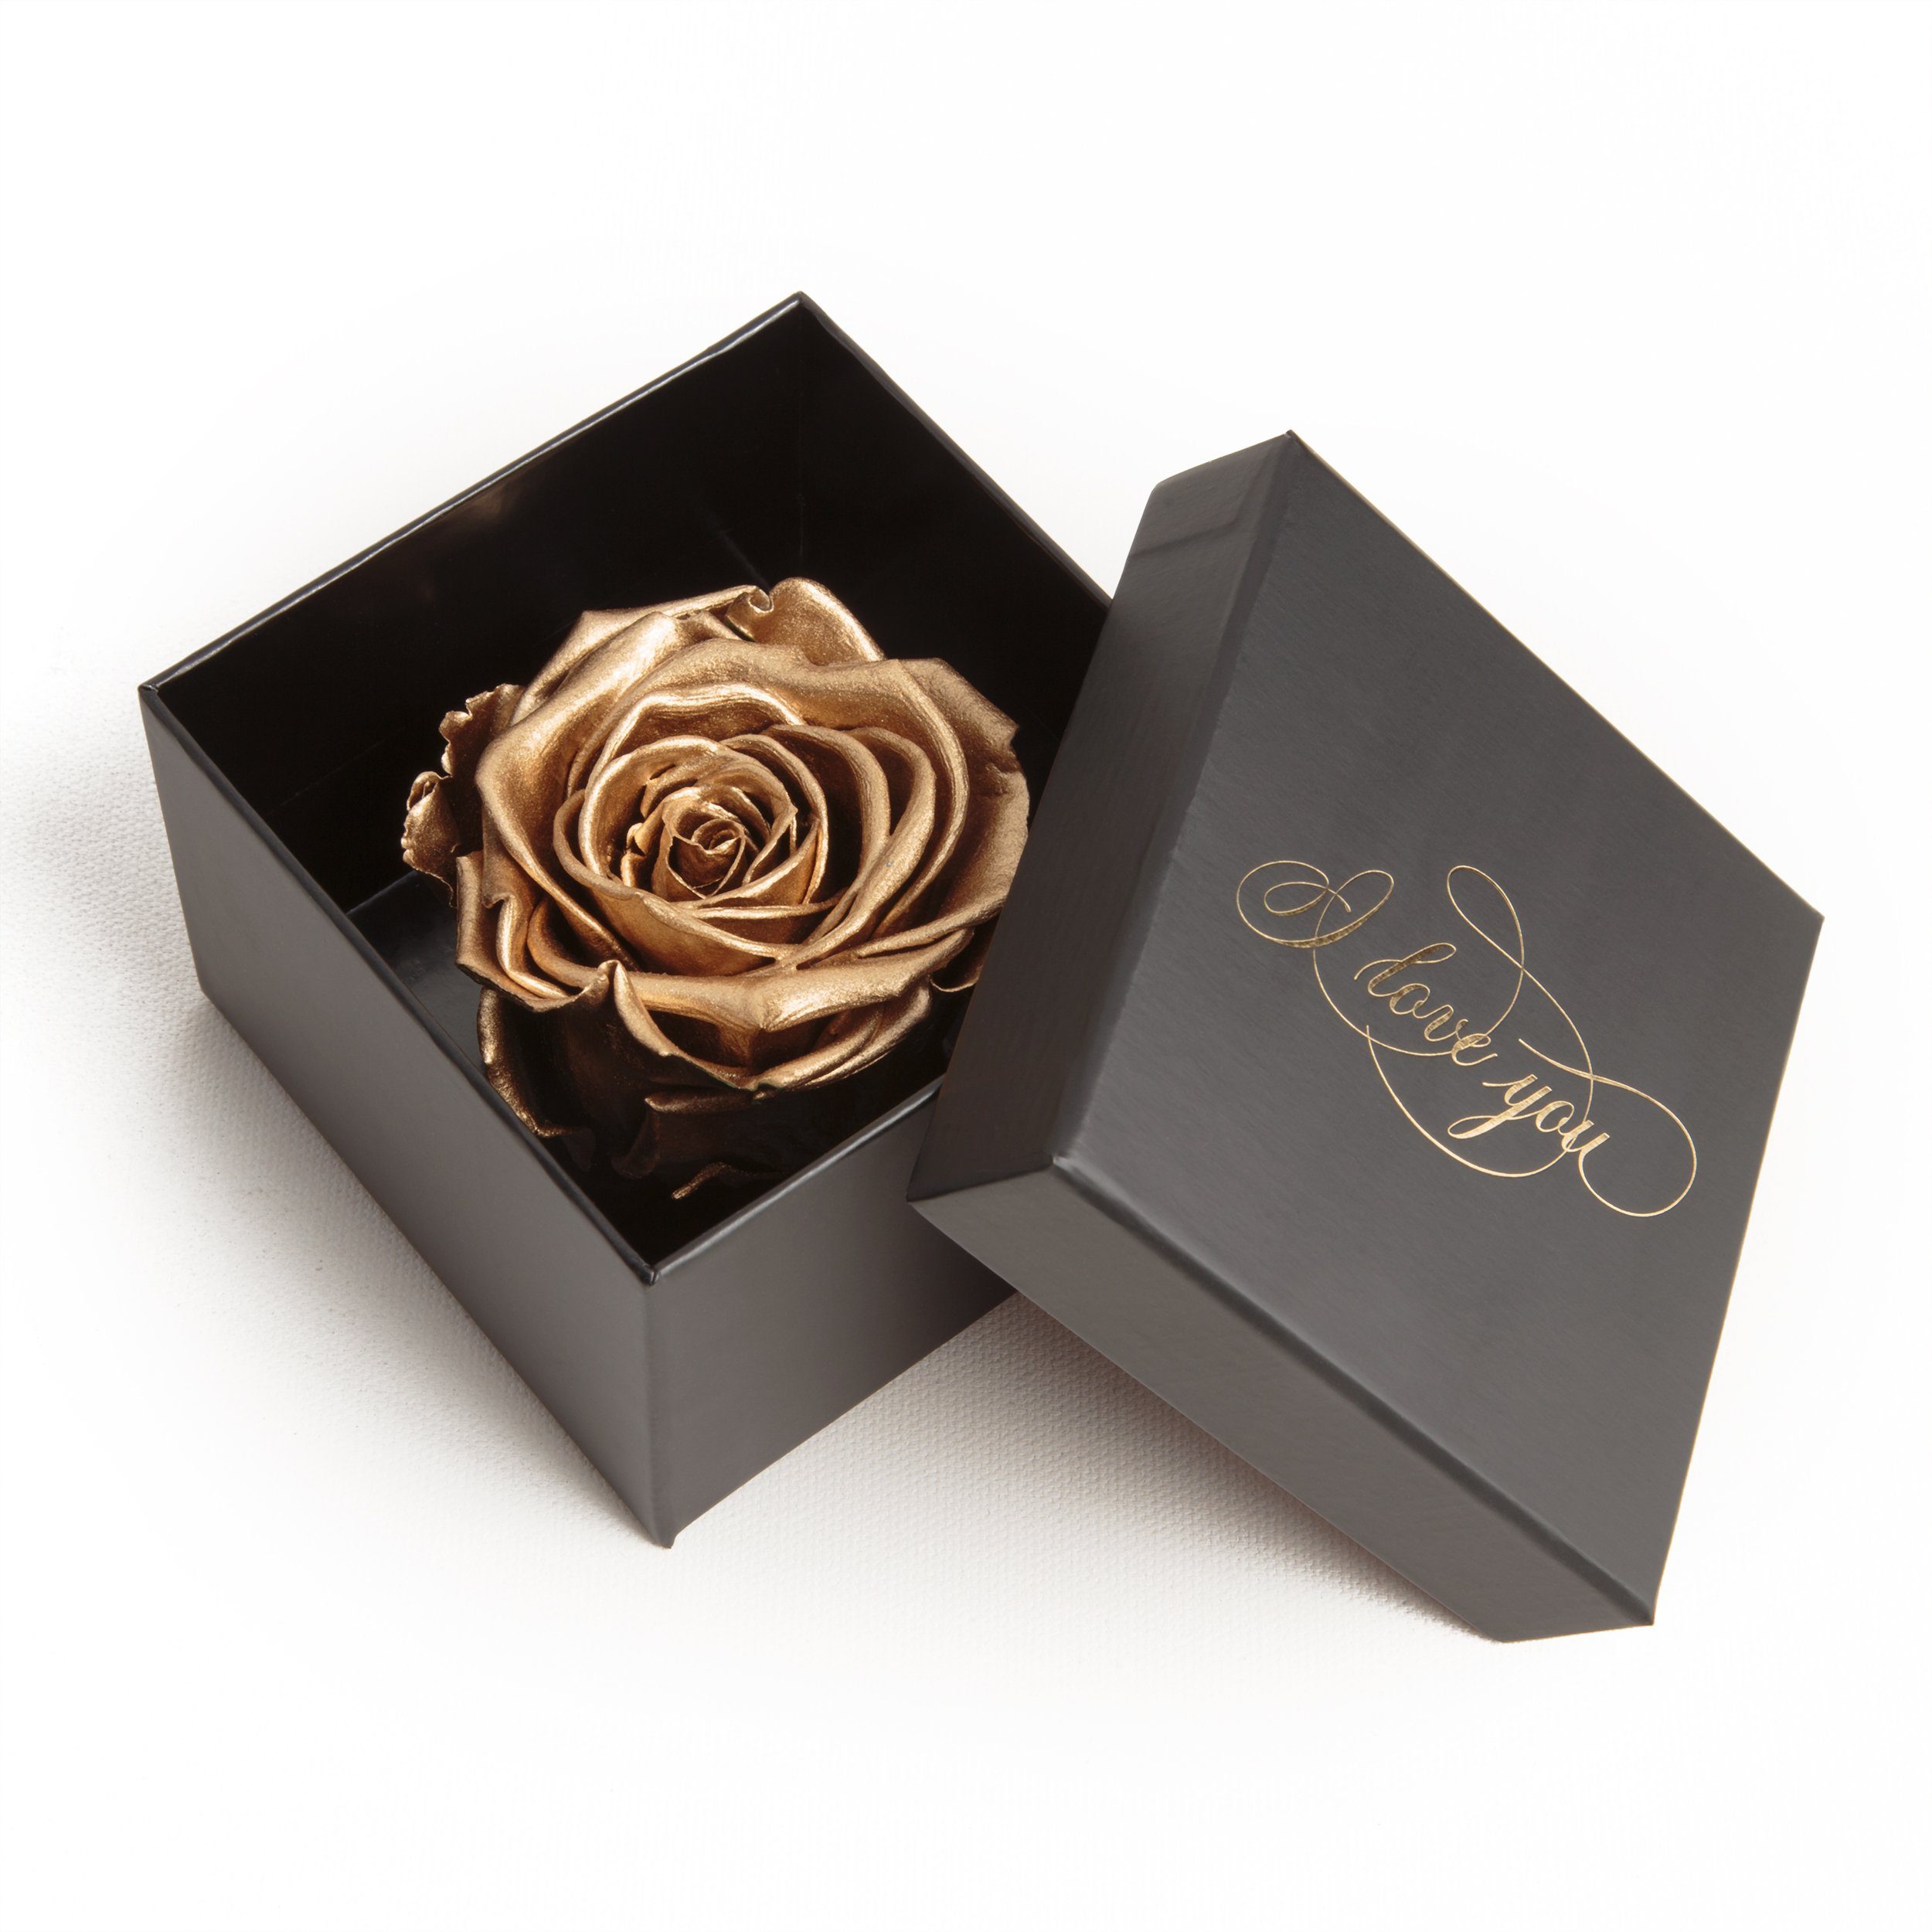 Kunstblume Infinity Rose Box I Love You Geschenk Idee Liebesbeweis Rose, ROSEMARIE SCHULZ Heidelberg, Höhe 6 cm, Echte Rose konserviert Gold